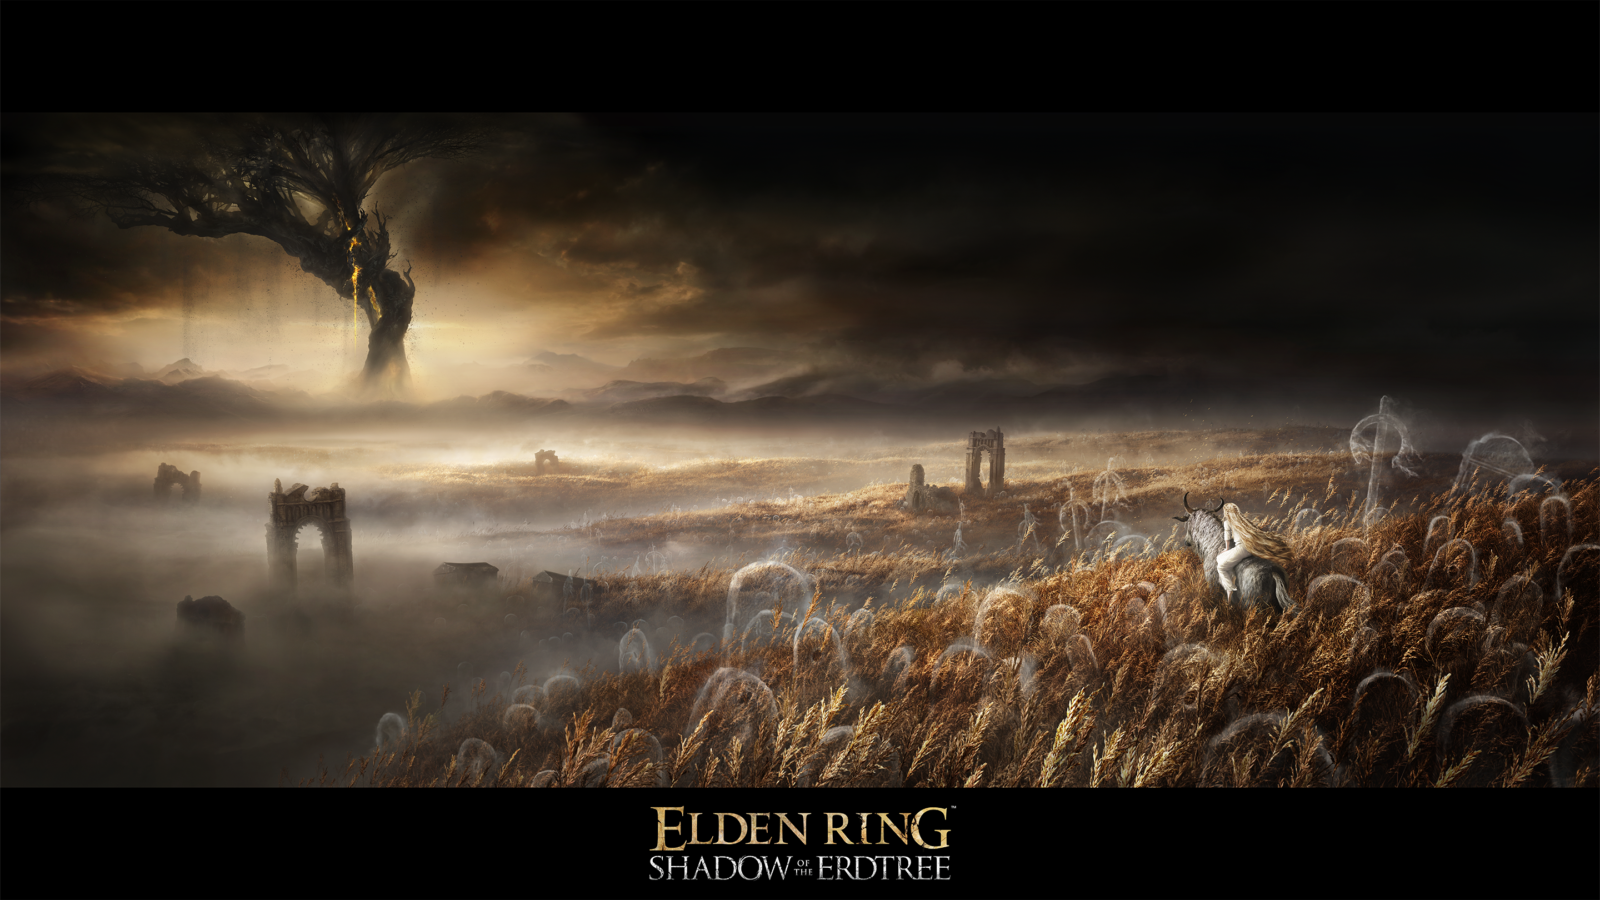 Arte da Dlc Shadow of the Erdtree, contéudo adicional de Elden Ring e seu mundo fantástico